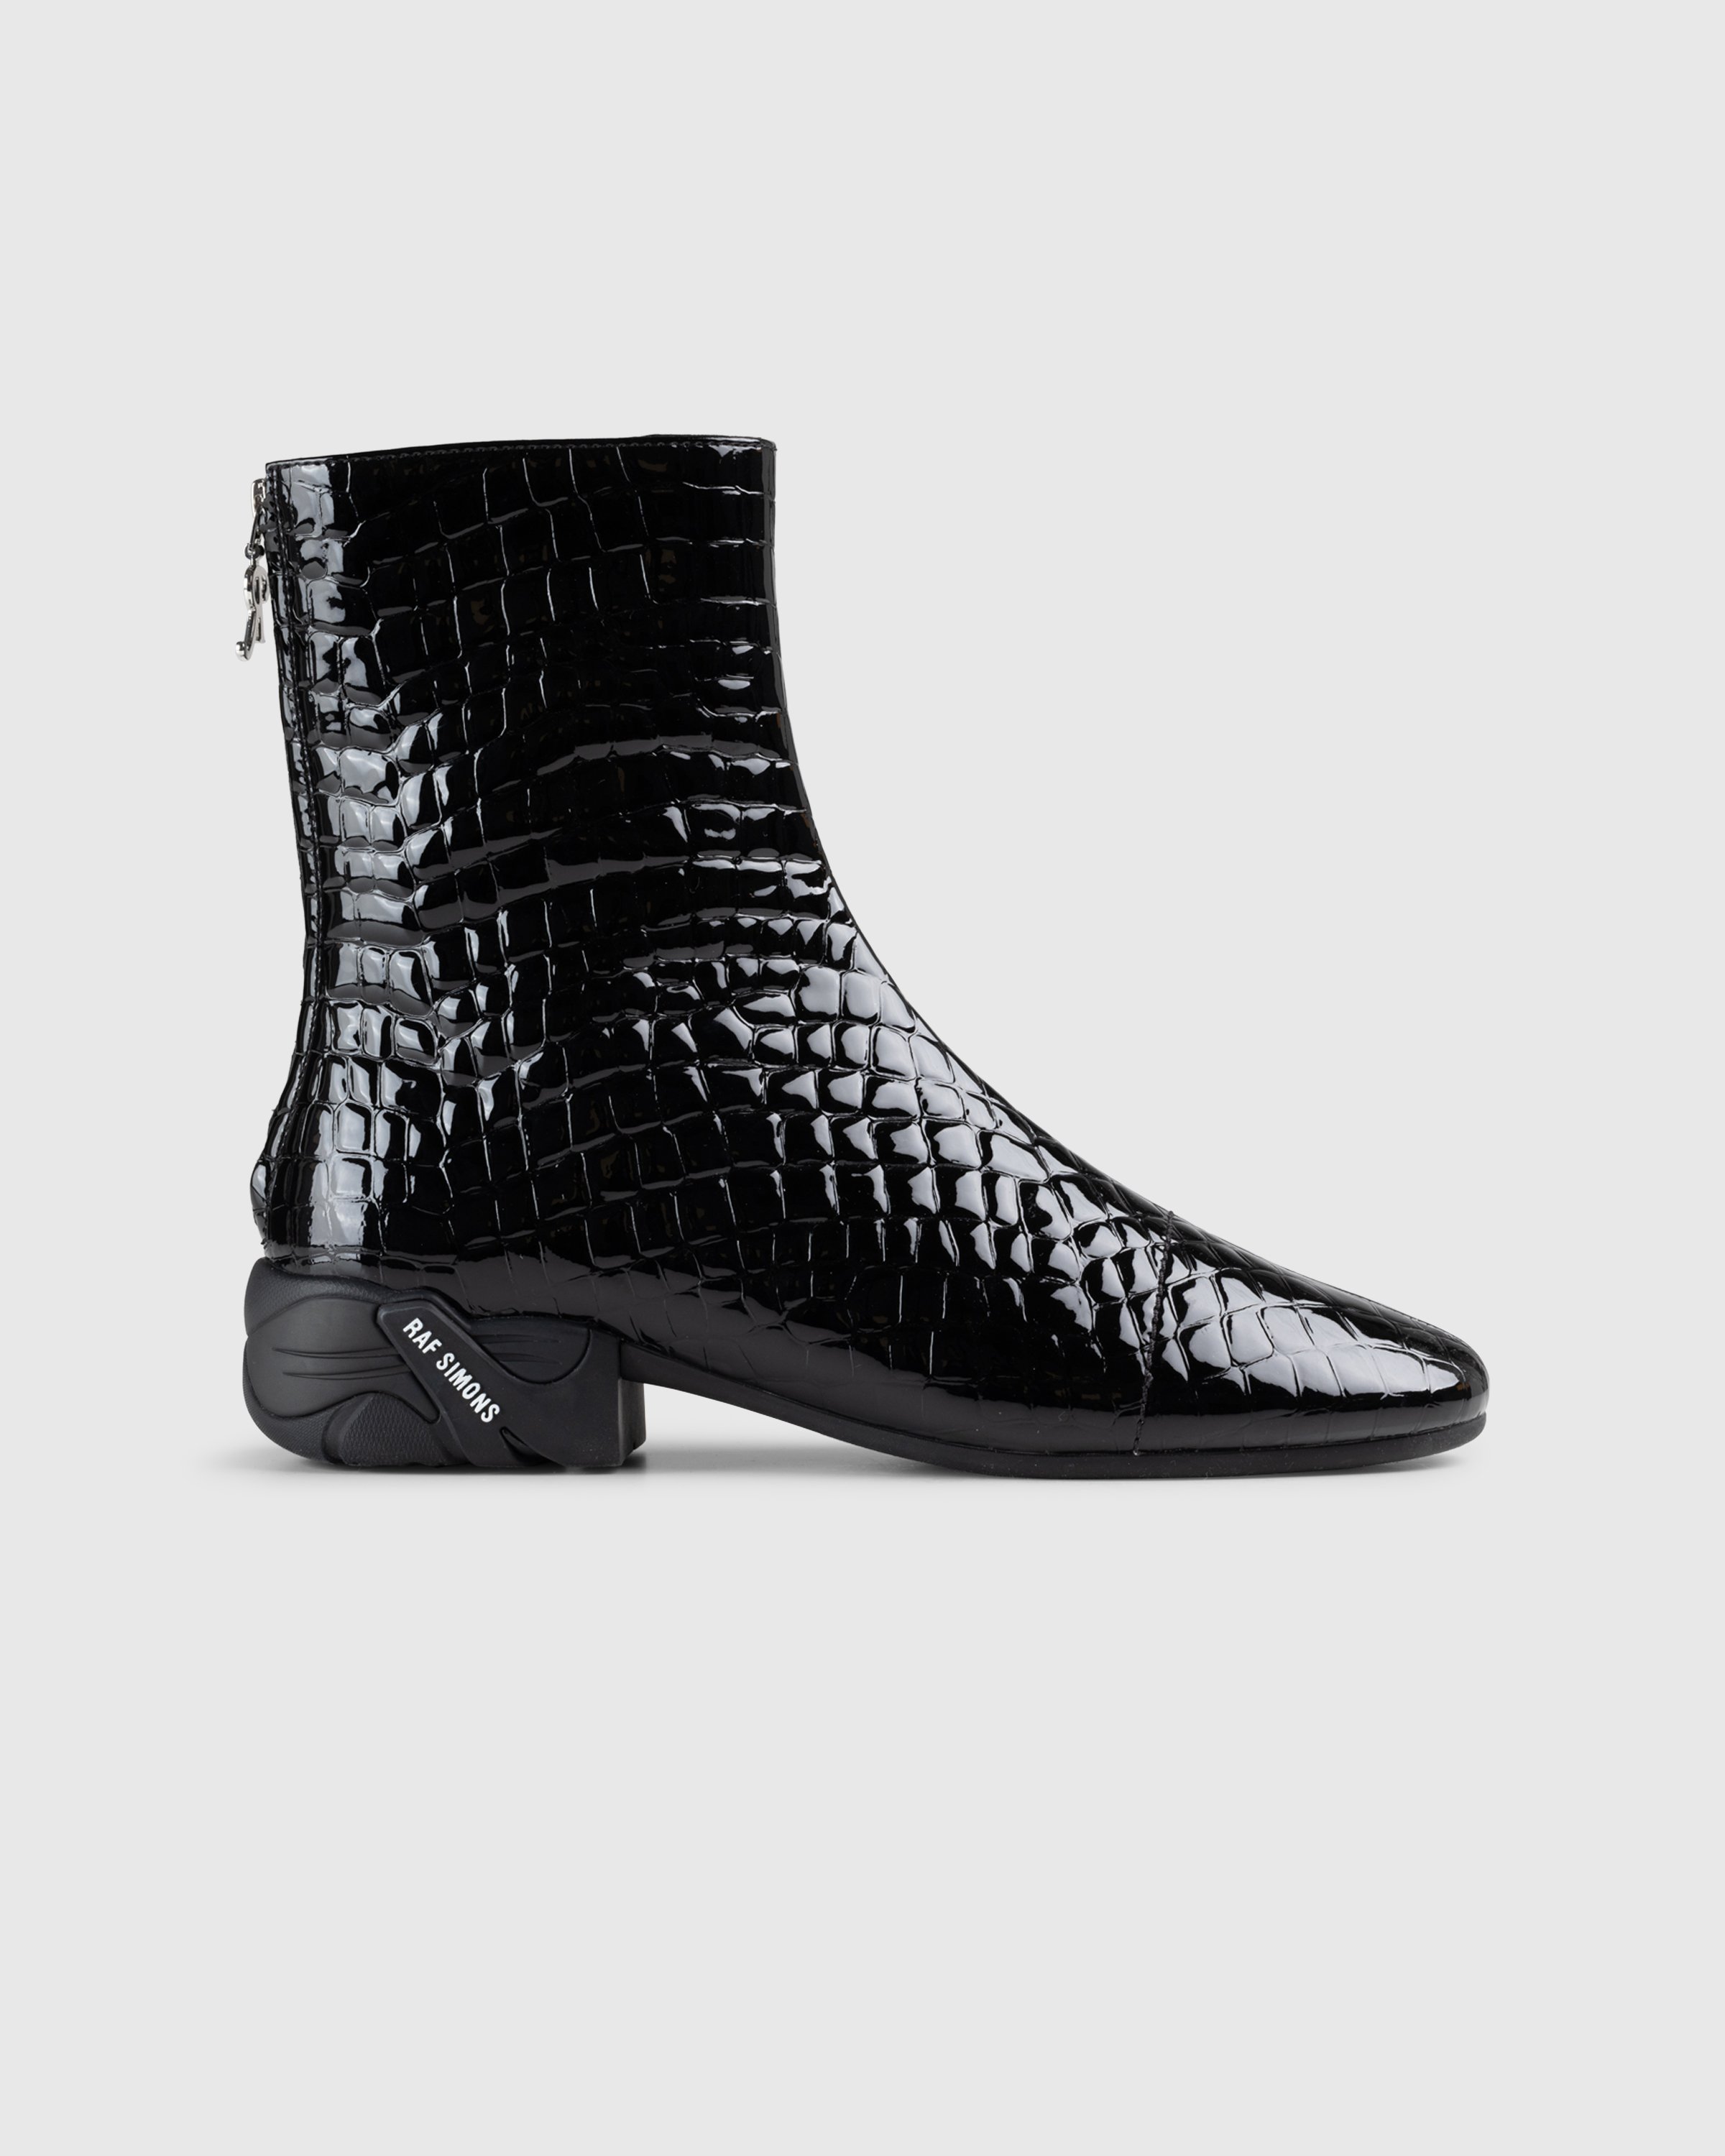 Raf Simons - Solaris High Leather Boot Black Croc - Footwear - Black - Image 1